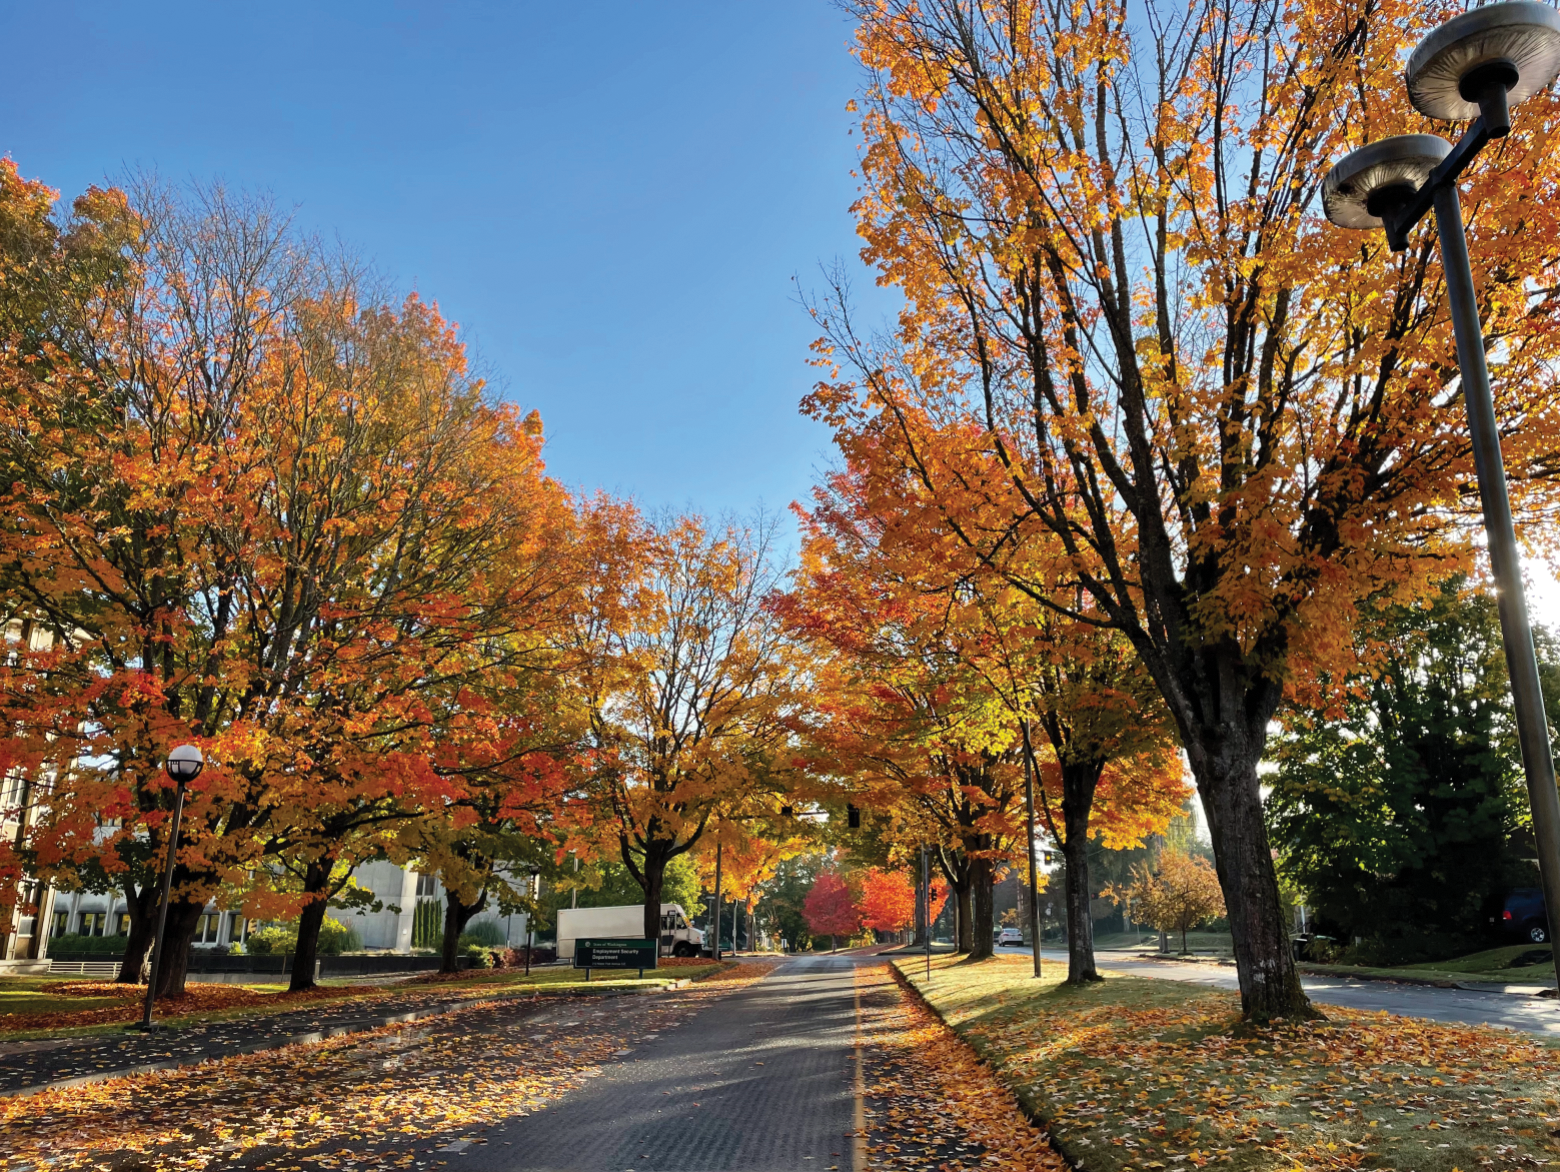 "Tree lined street at Maple Park in Olympia, Washington"